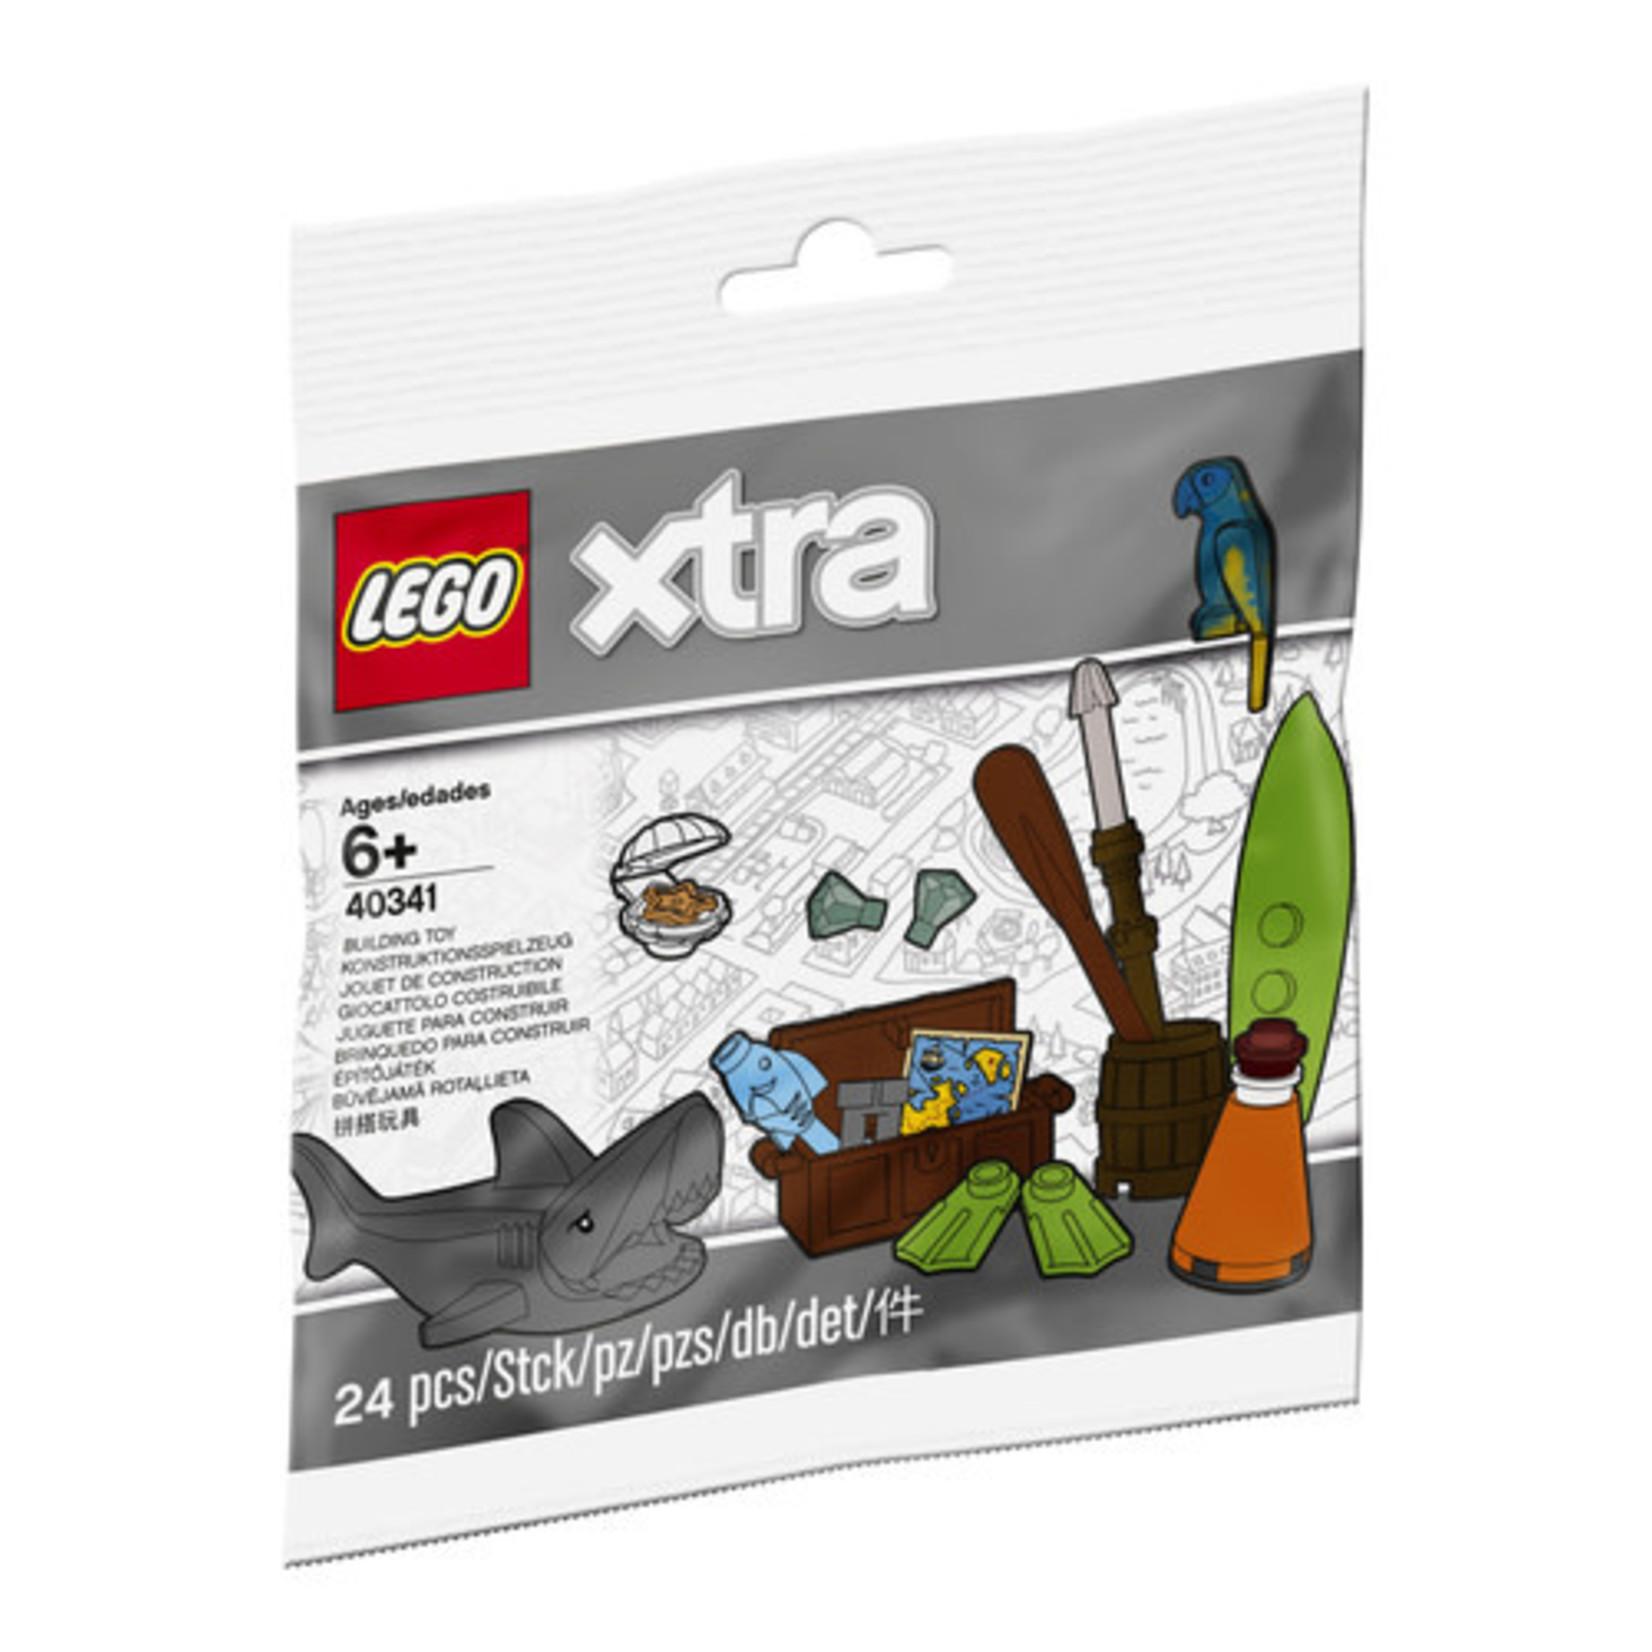 LEGO Xtra zee-accessoires - 40341